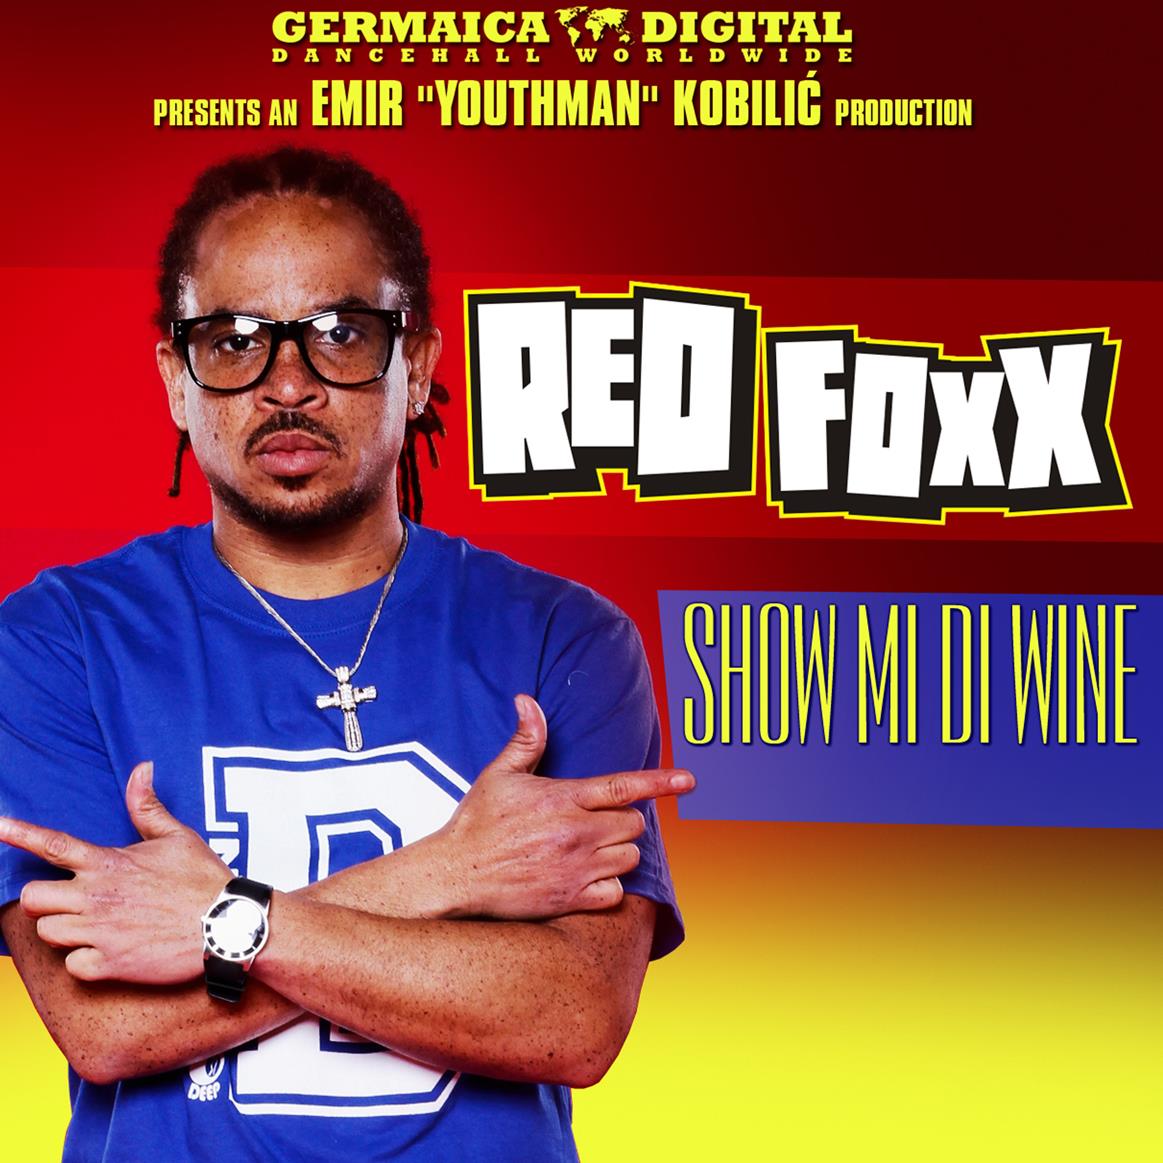 Red Fox - Show Mi Di Whine - Clean - Download1163 x 1163